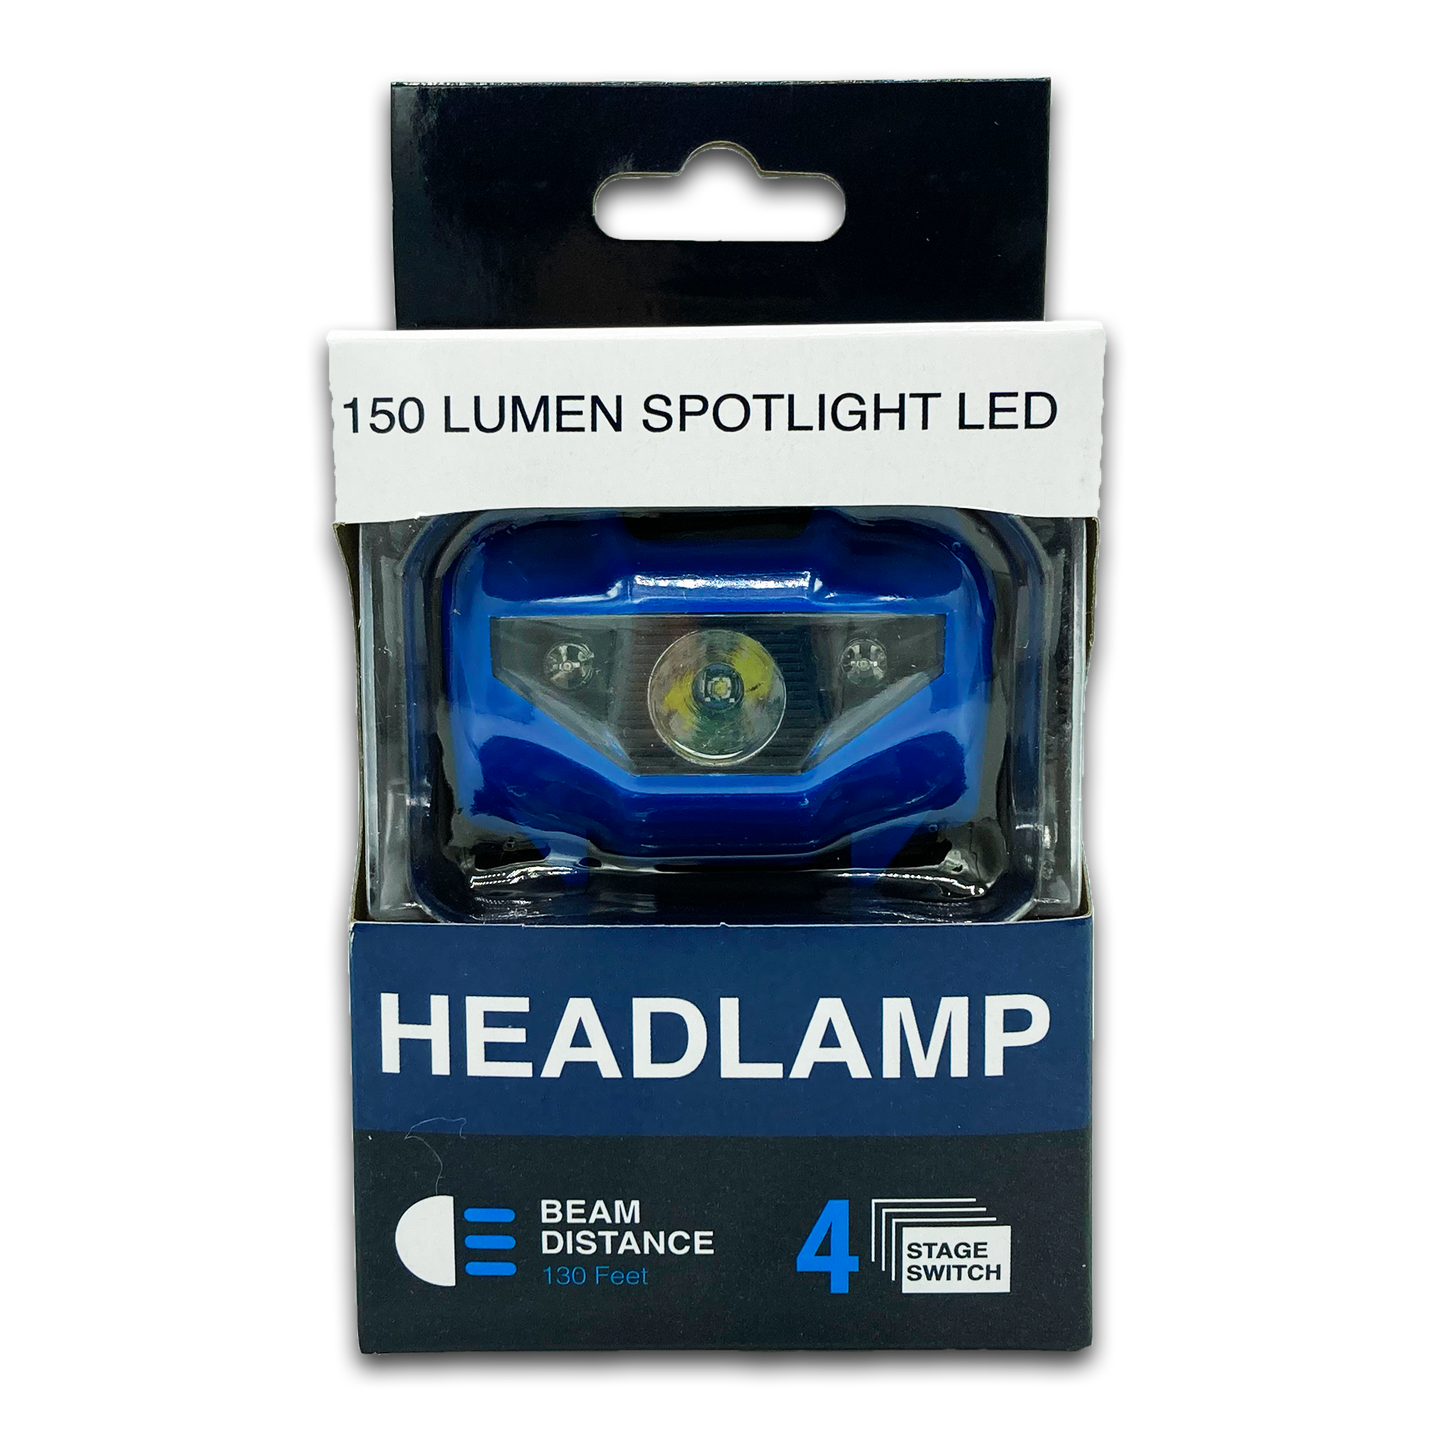 150 LUMEN SPOTLIGHT LED HEADLAMP